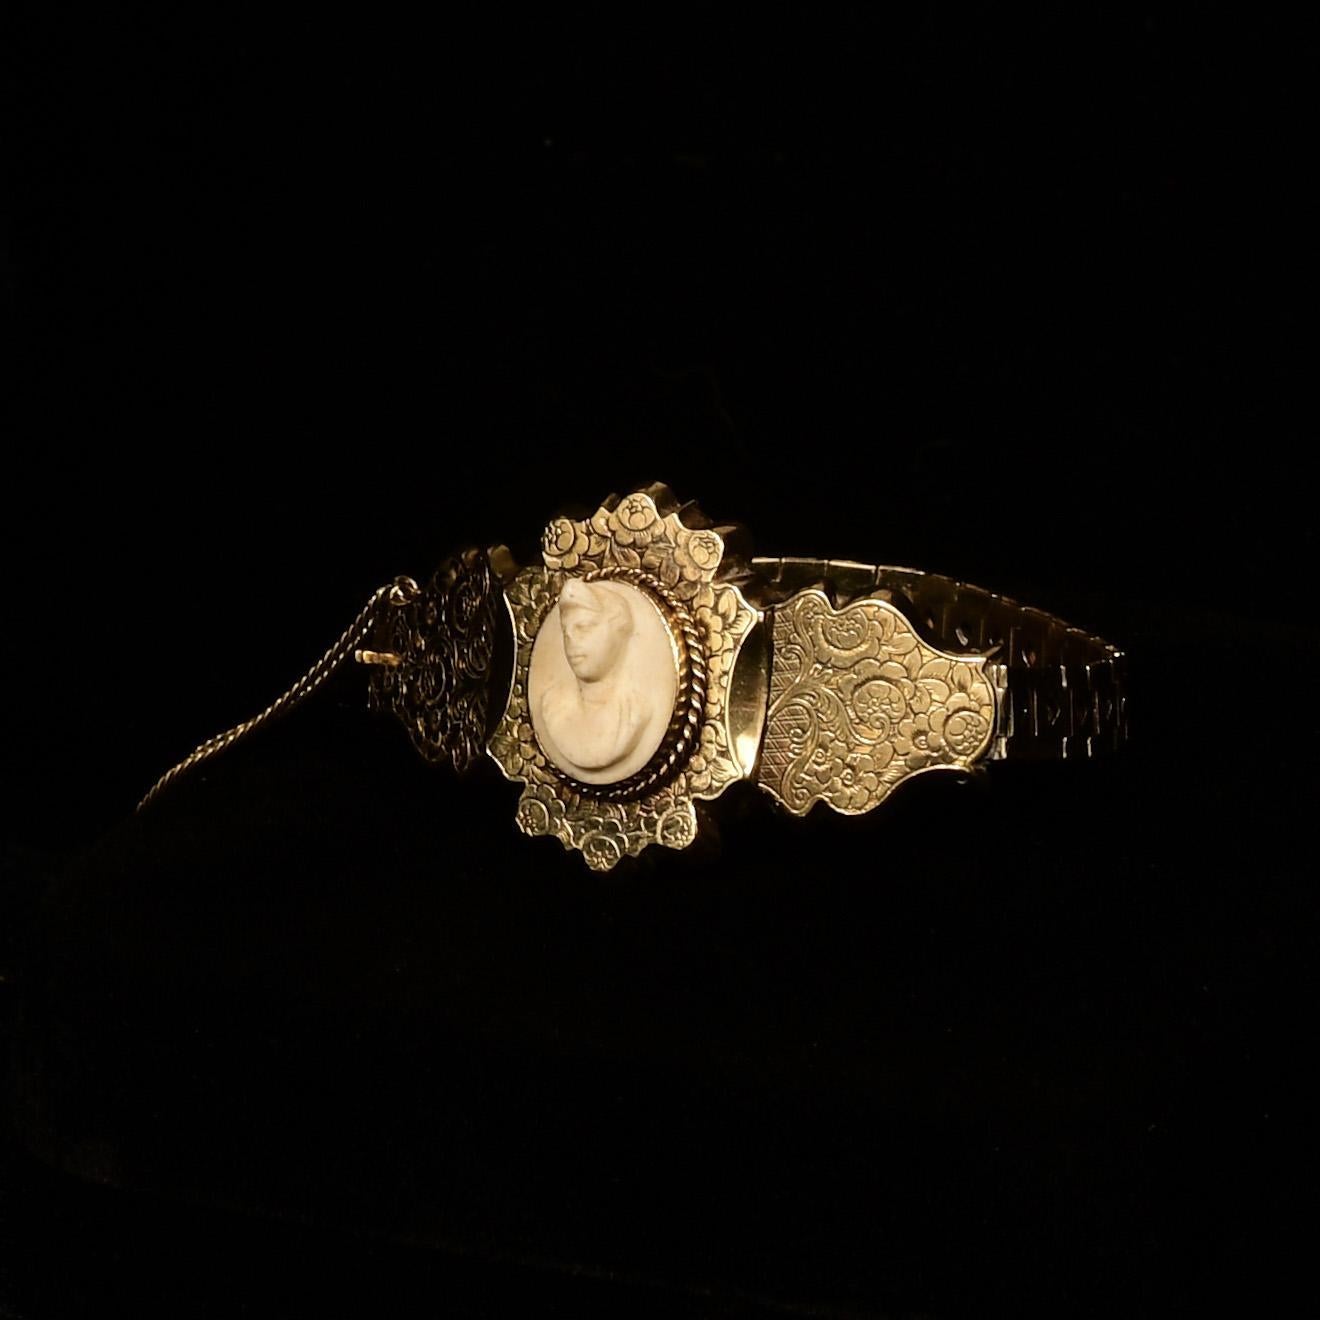 Antique Victorian Cameo Bracelet with Ornate Floral Engraving 14K Gold 1